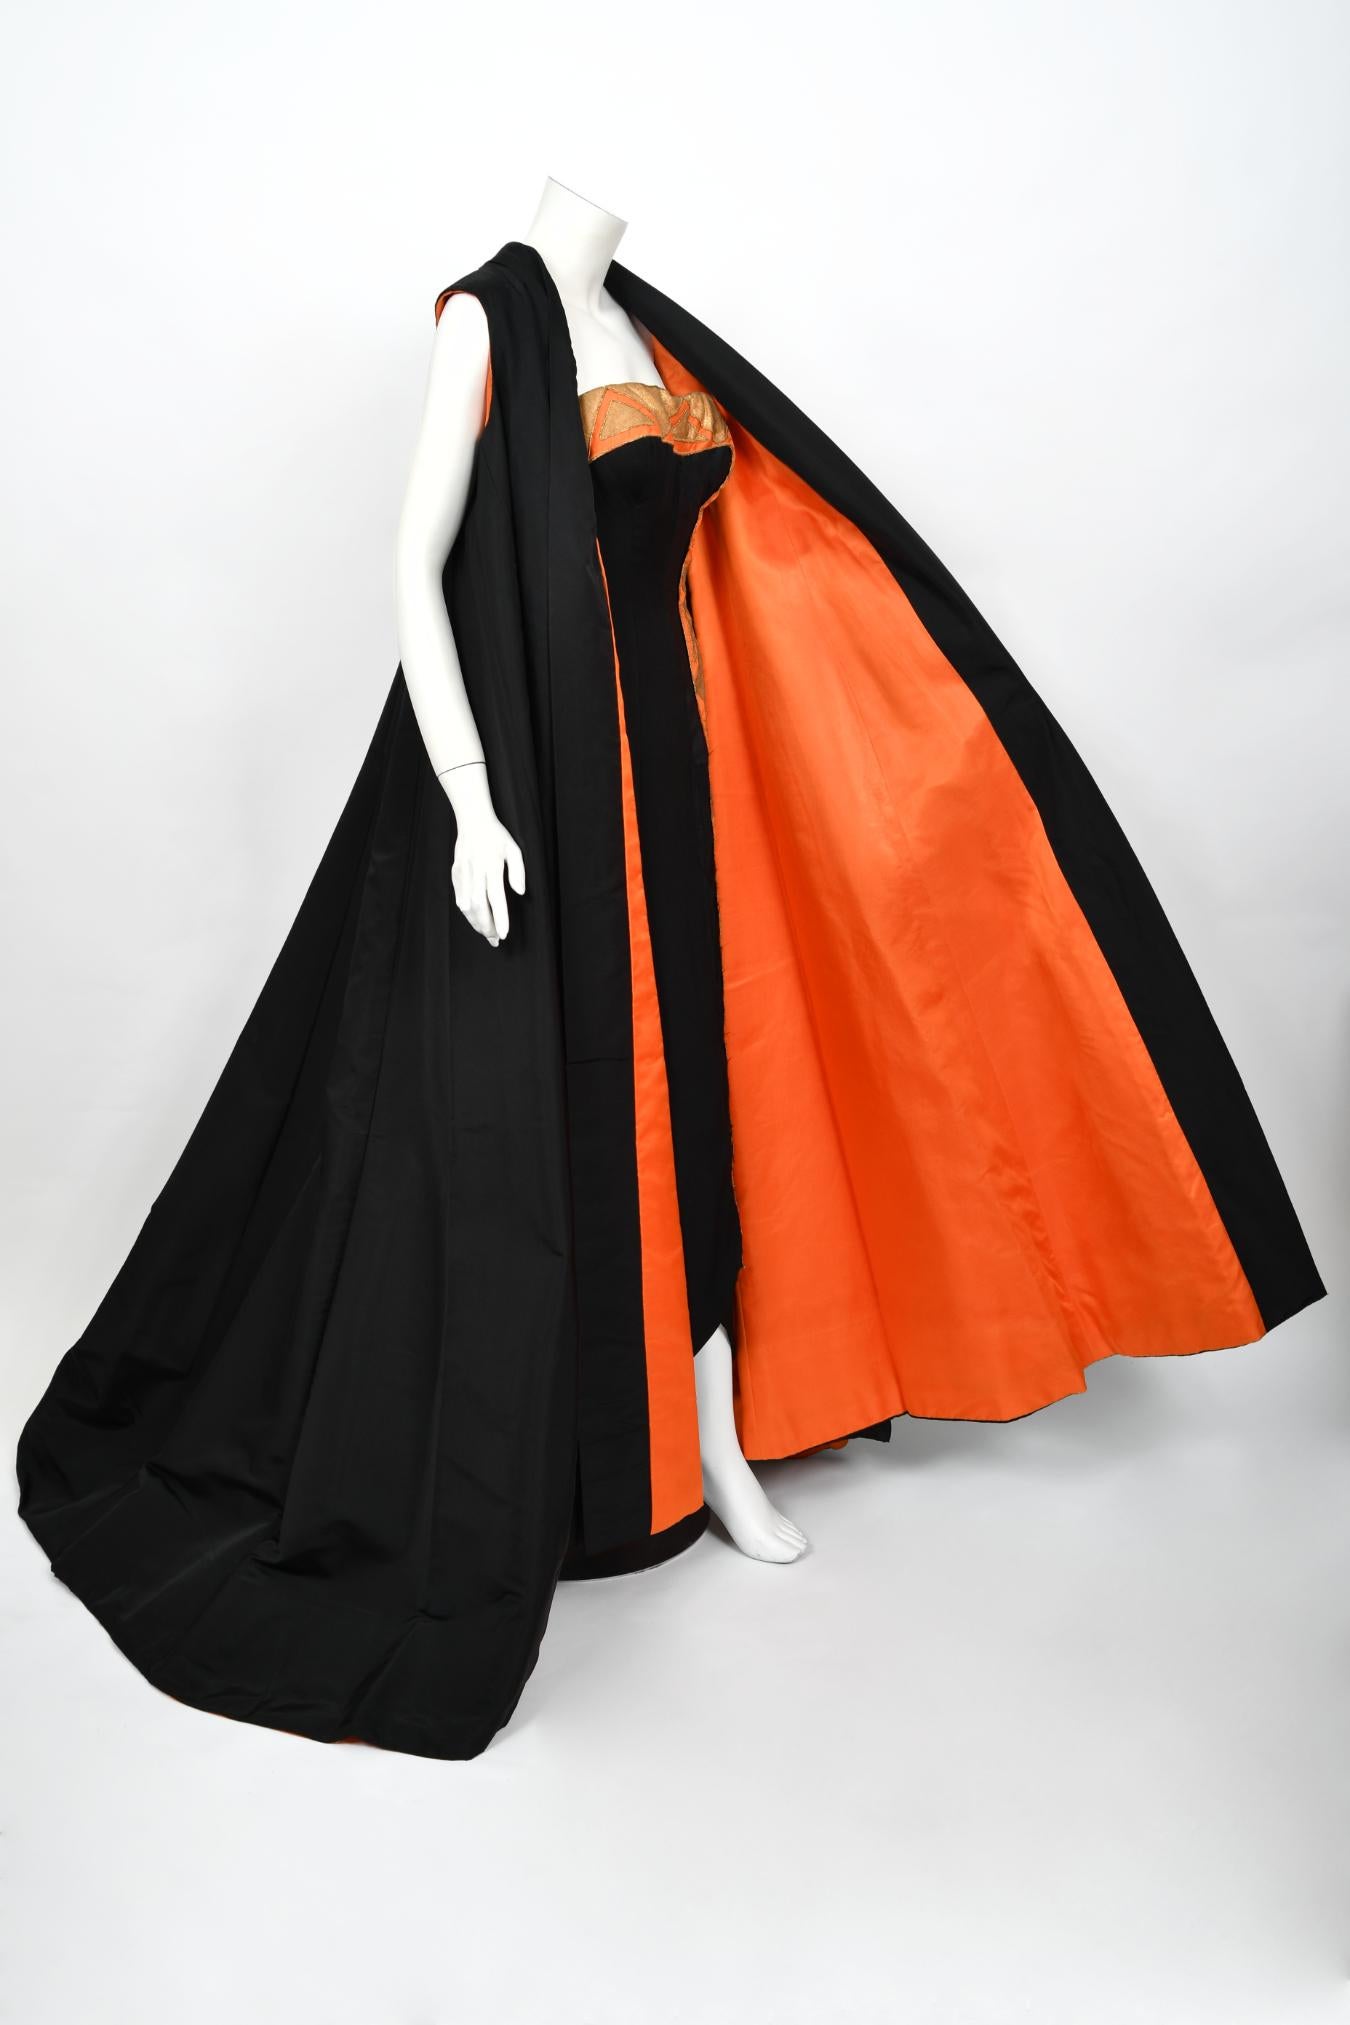 Vintage 1950s Yma Sumac Custom Couture Black Orange Silk Hourglass Gown Ensemble For Sale 5